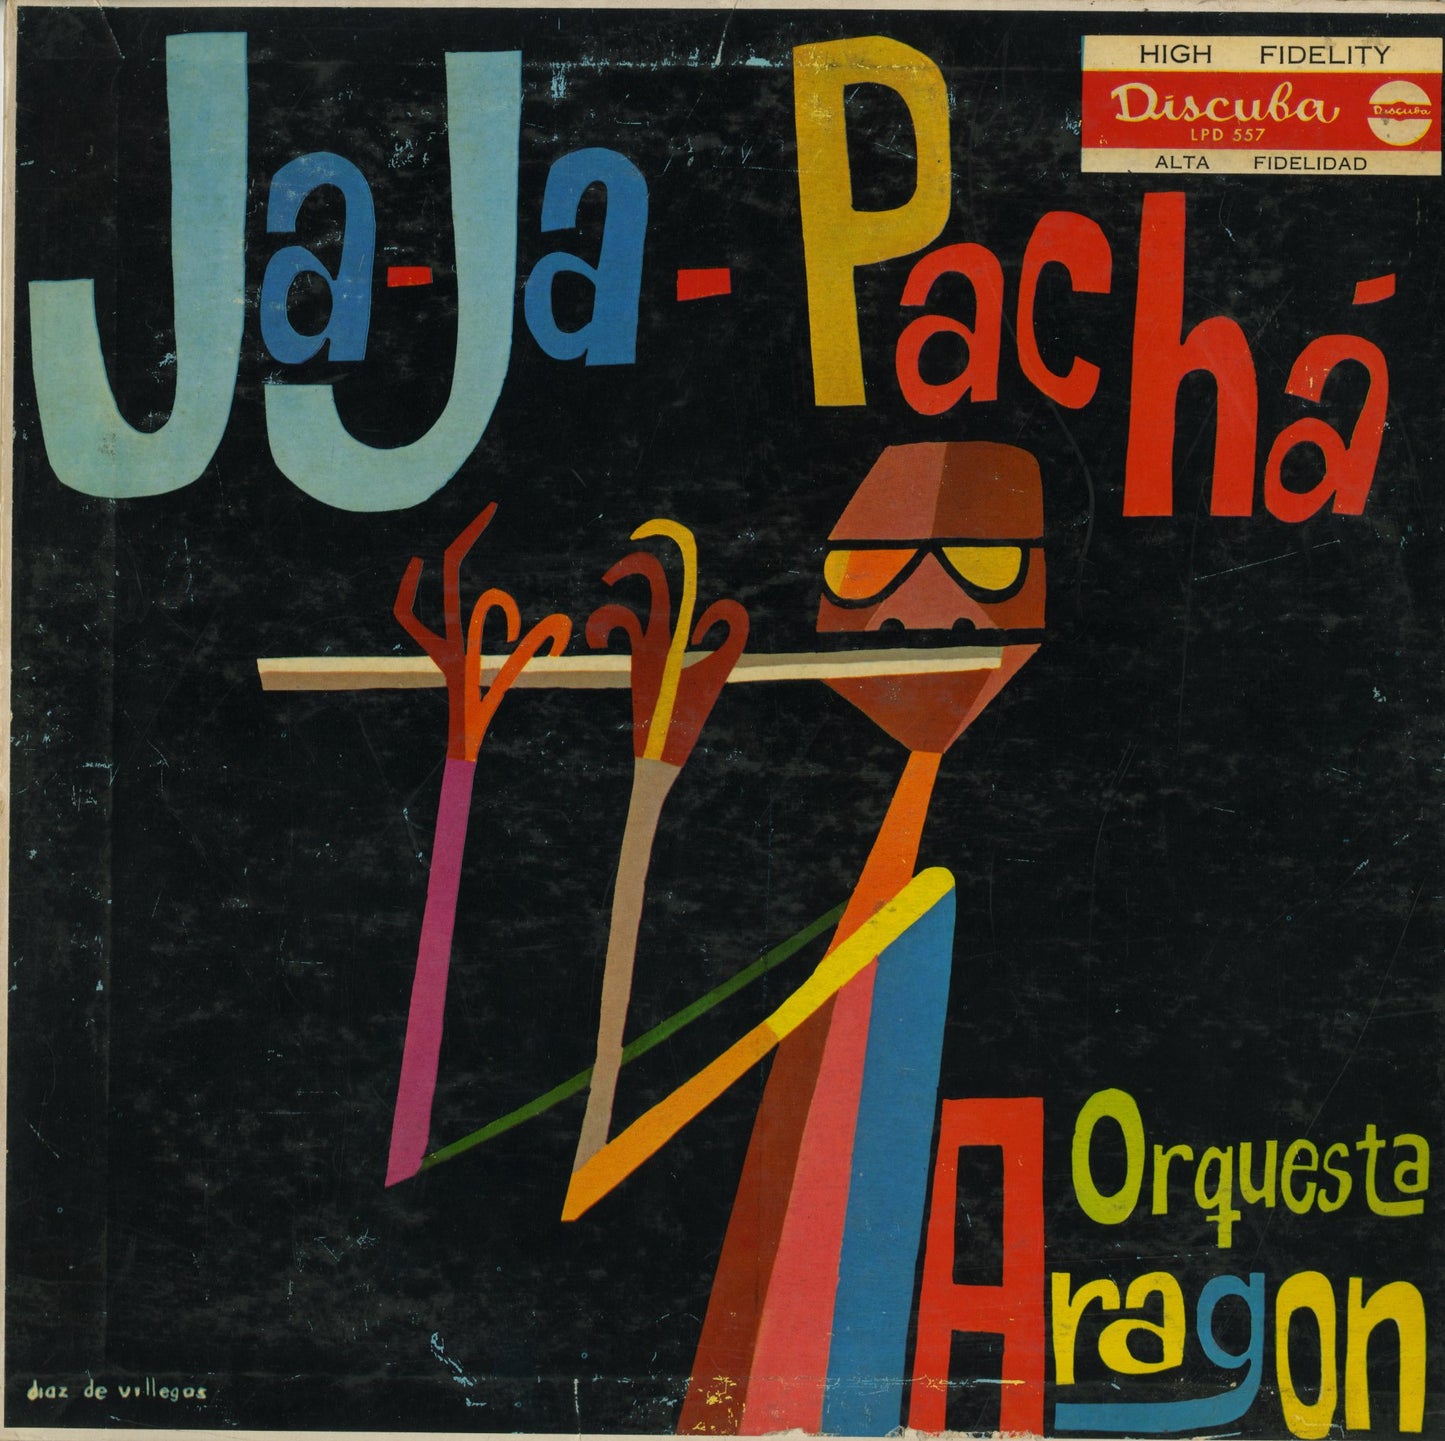 Orquesta Aragon / オルケスタ・アラゴン / Ja-Ja-Pacha (LPD-557)